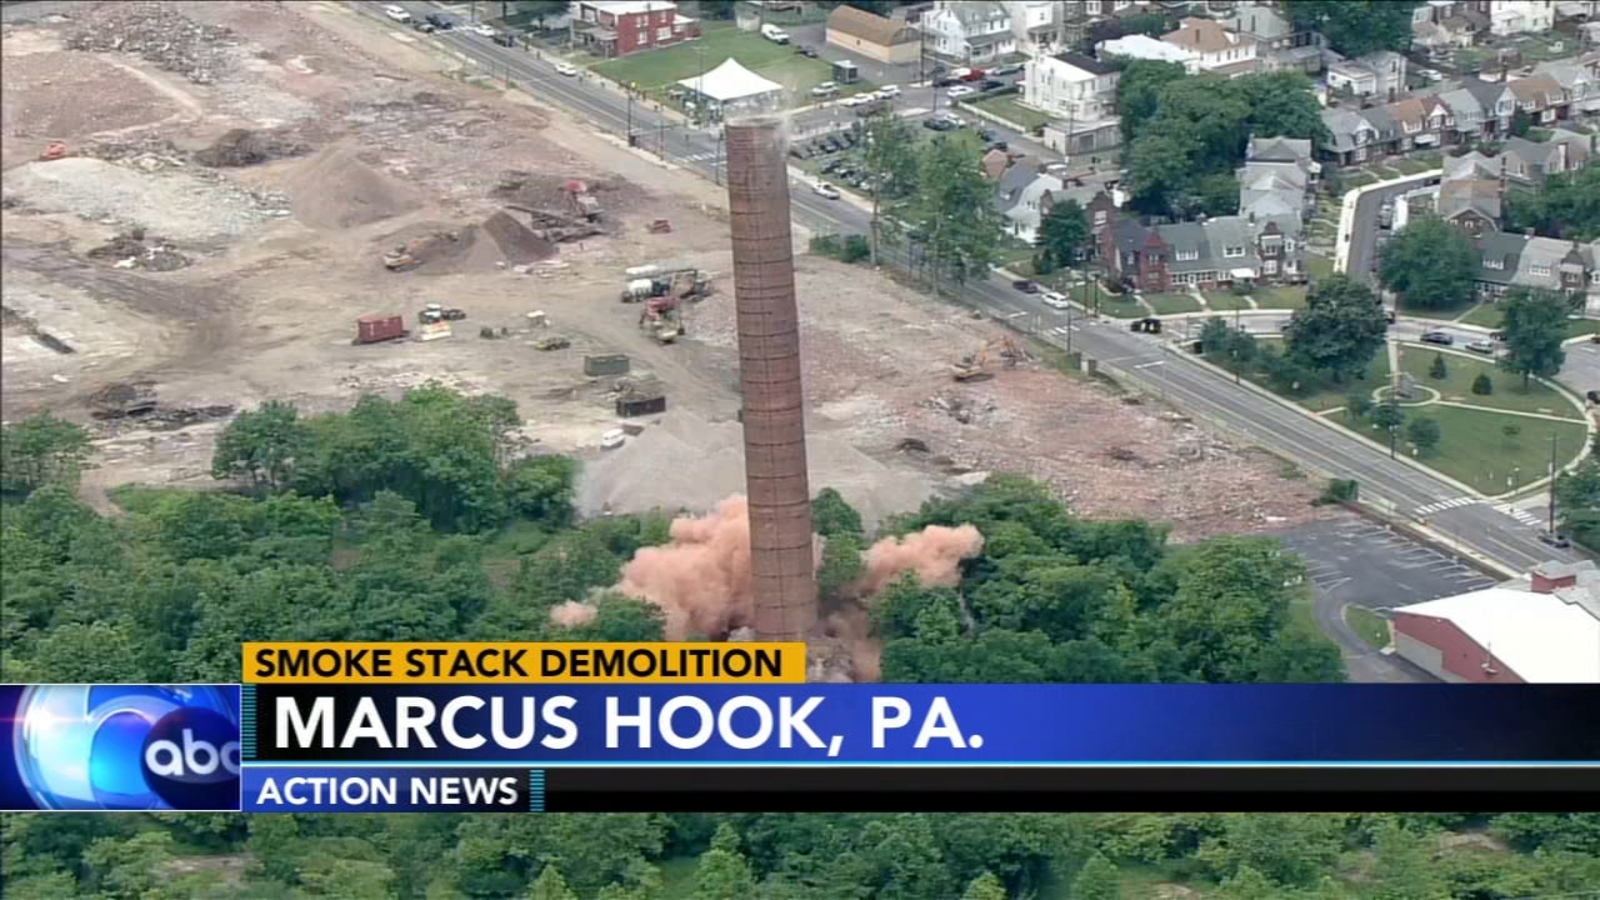  Officials demolish long-standing smokestack in Marcus Hook, Pennsylvania 